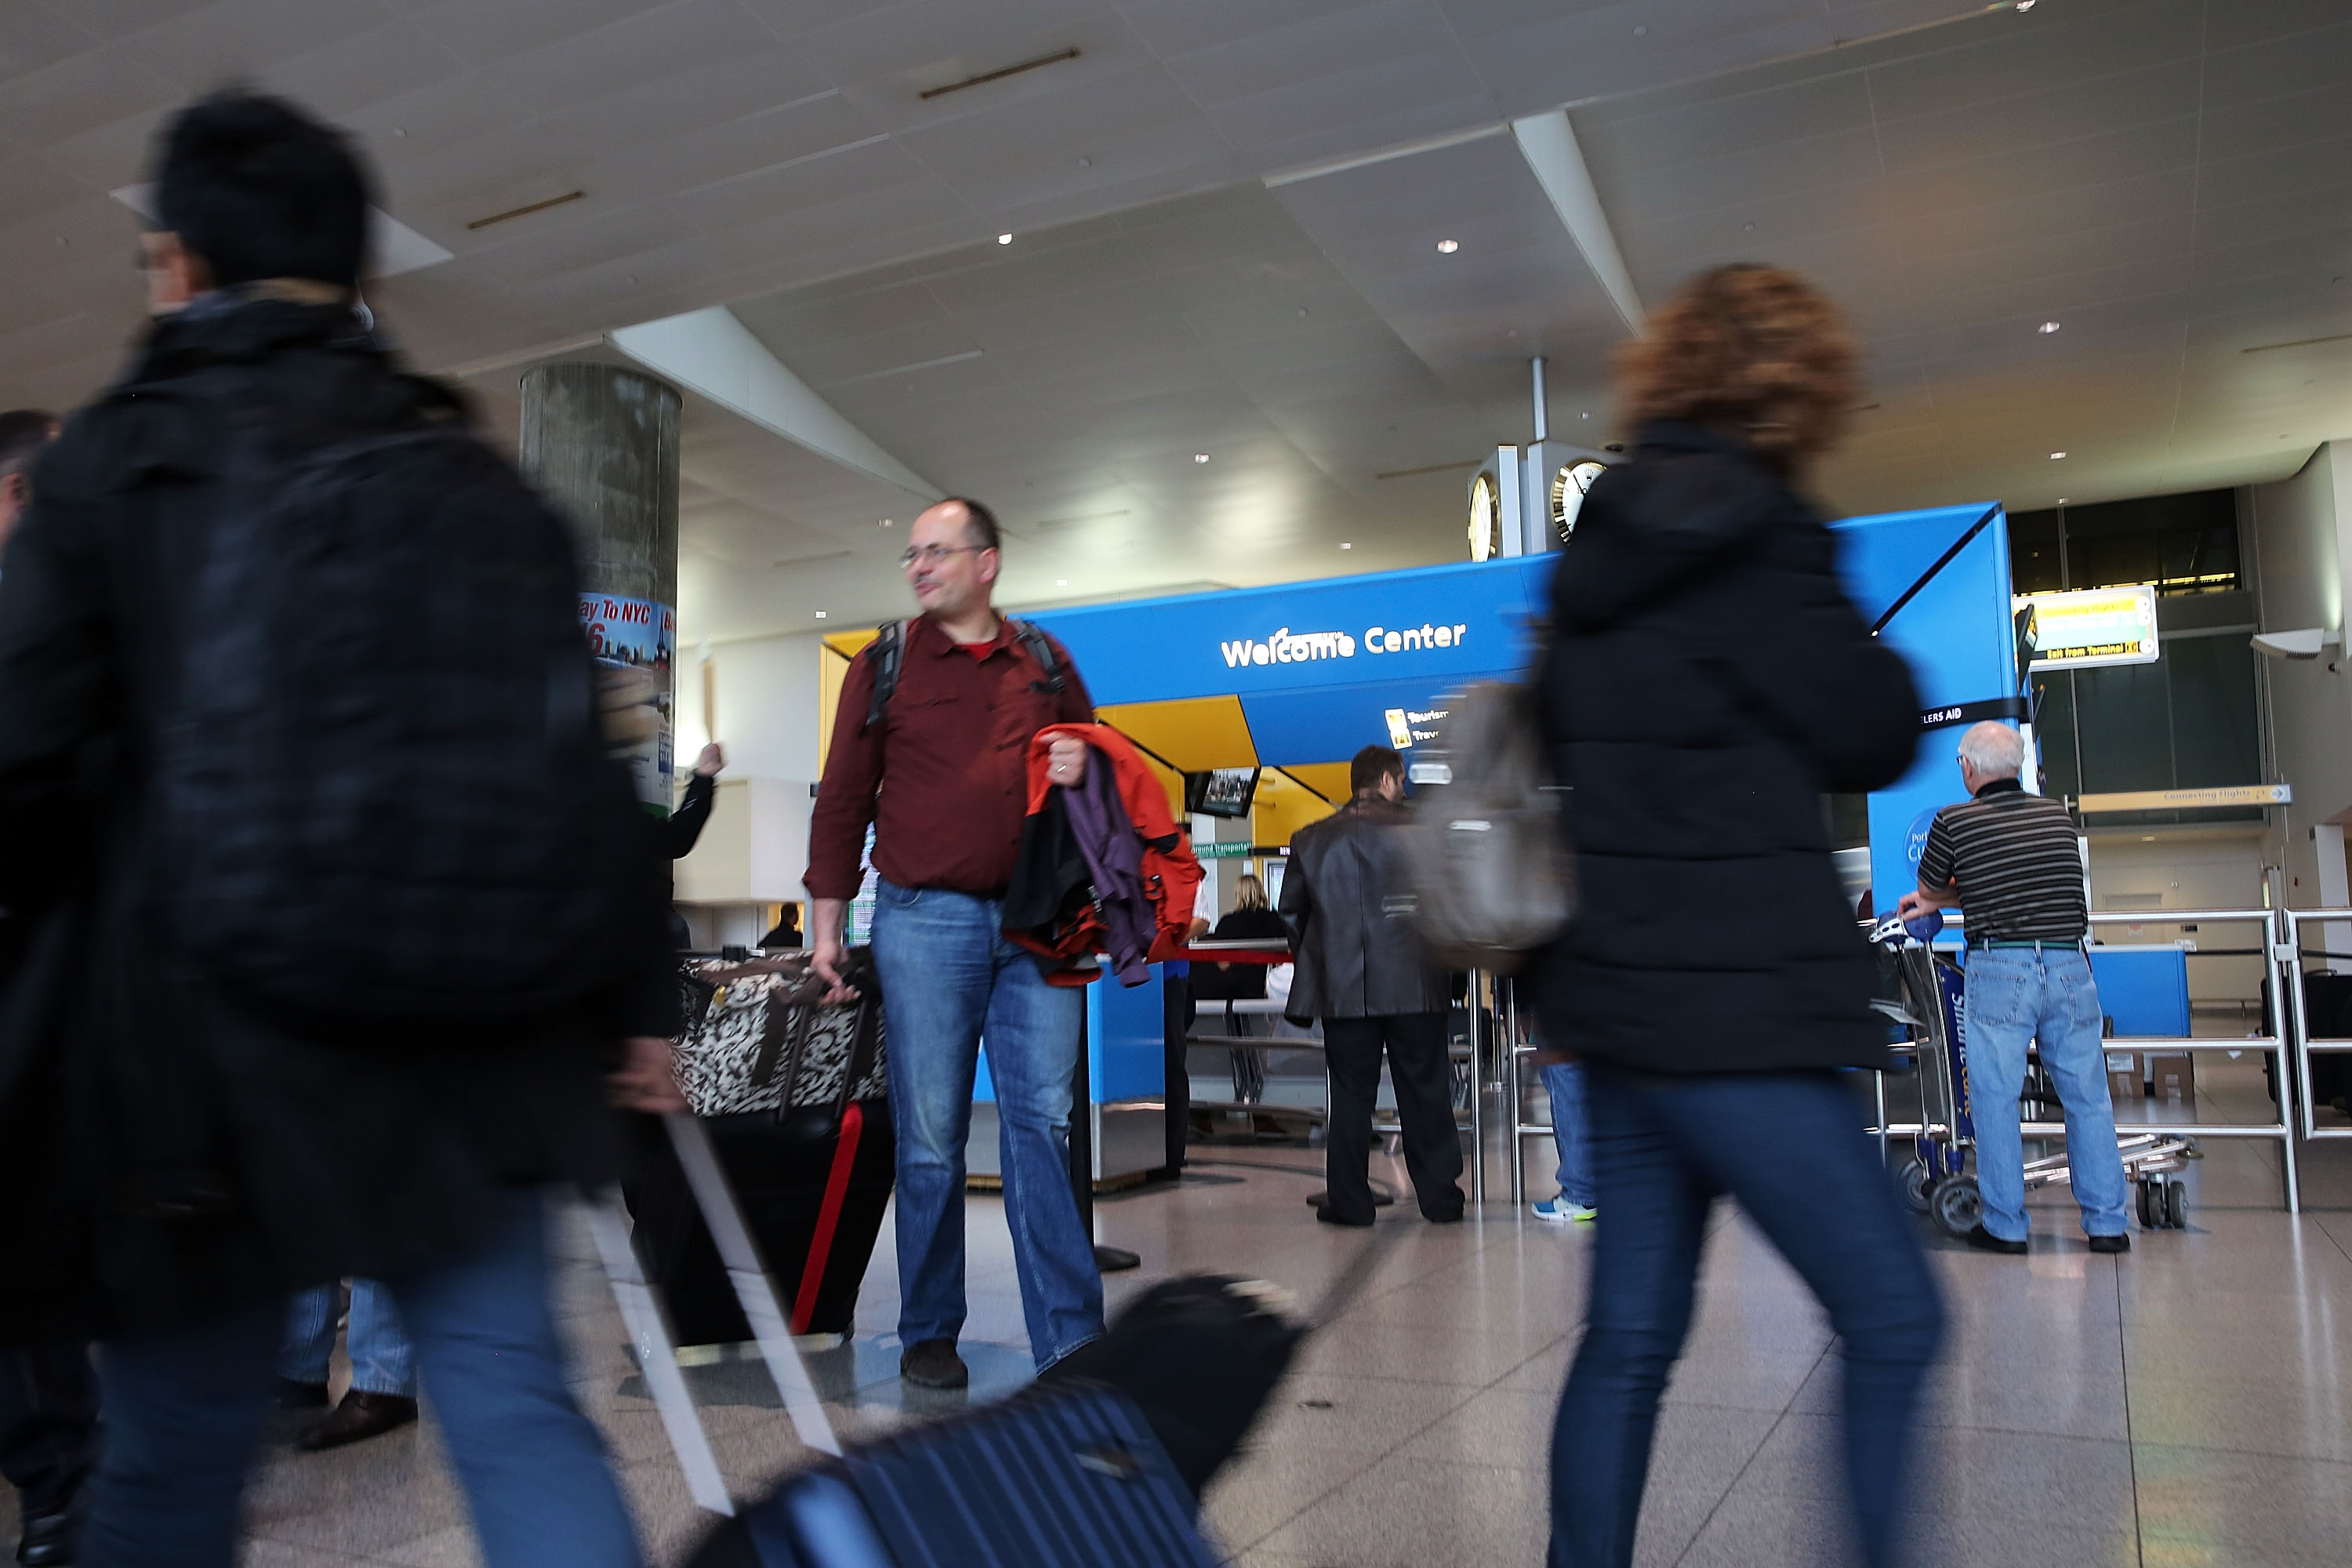 New York's JFK Airport Begins Screening Passengers For Ebola Virus